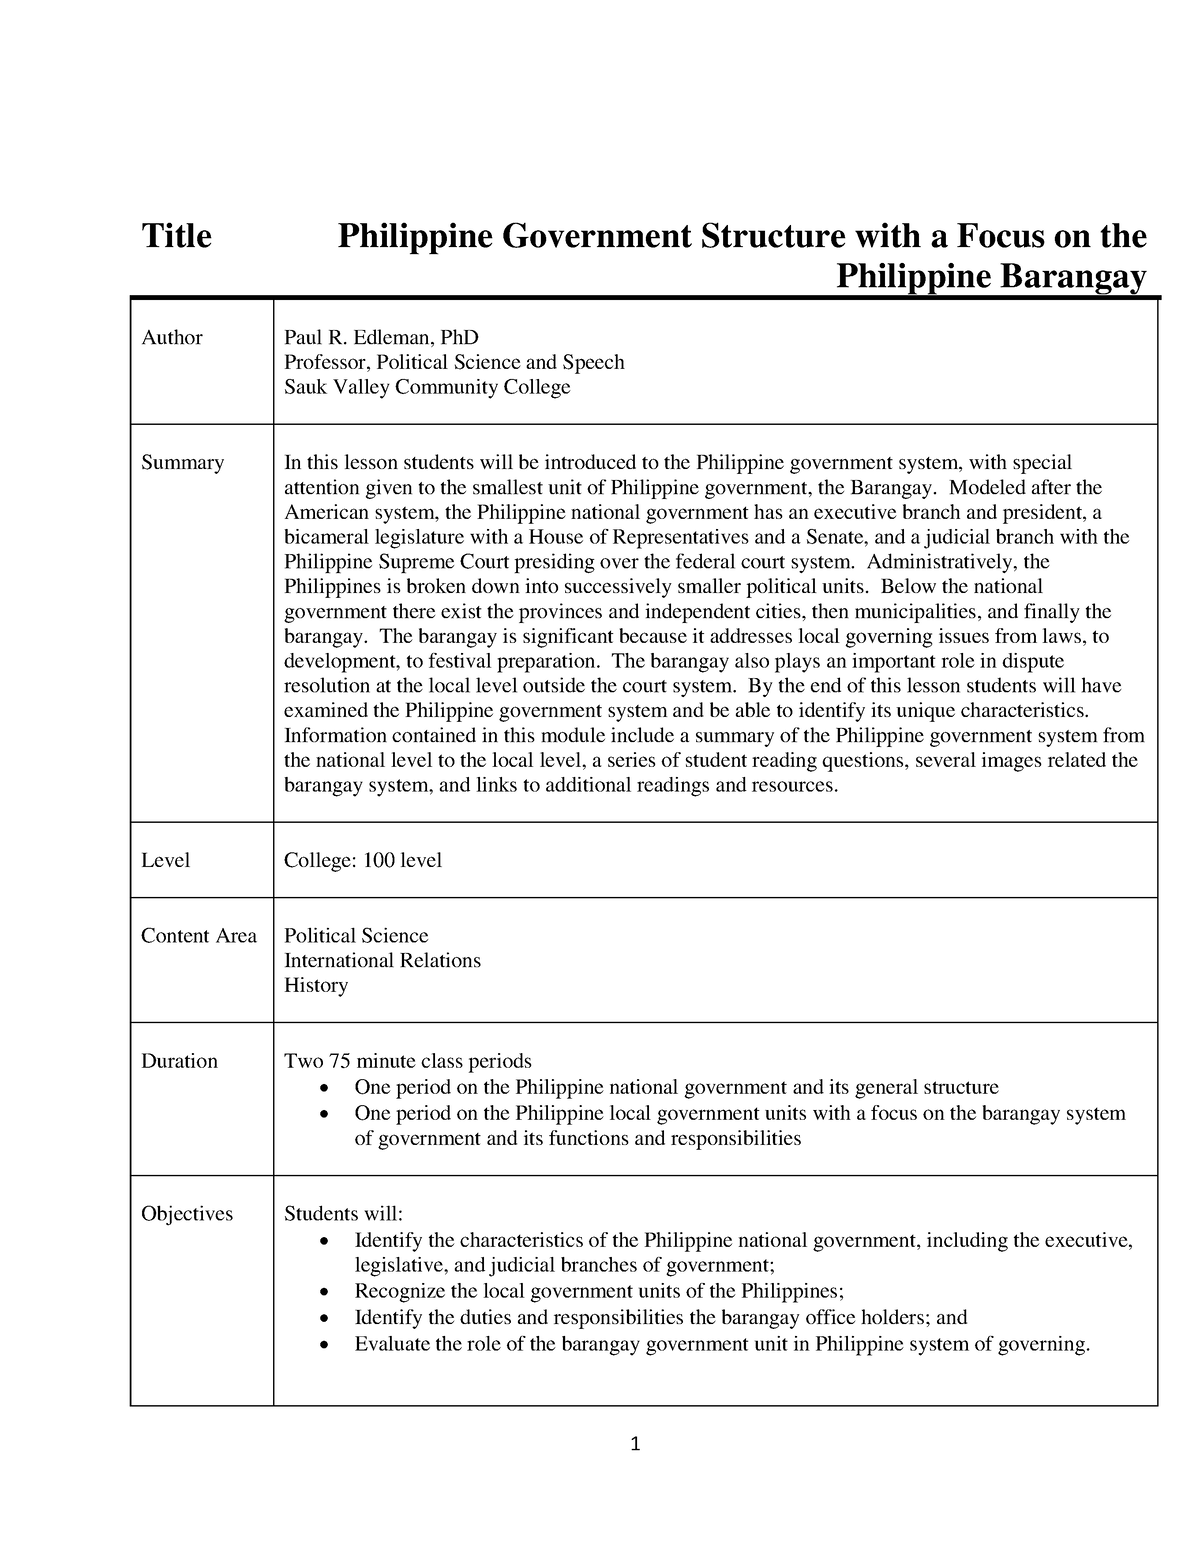 the philippine political structure essay pdf